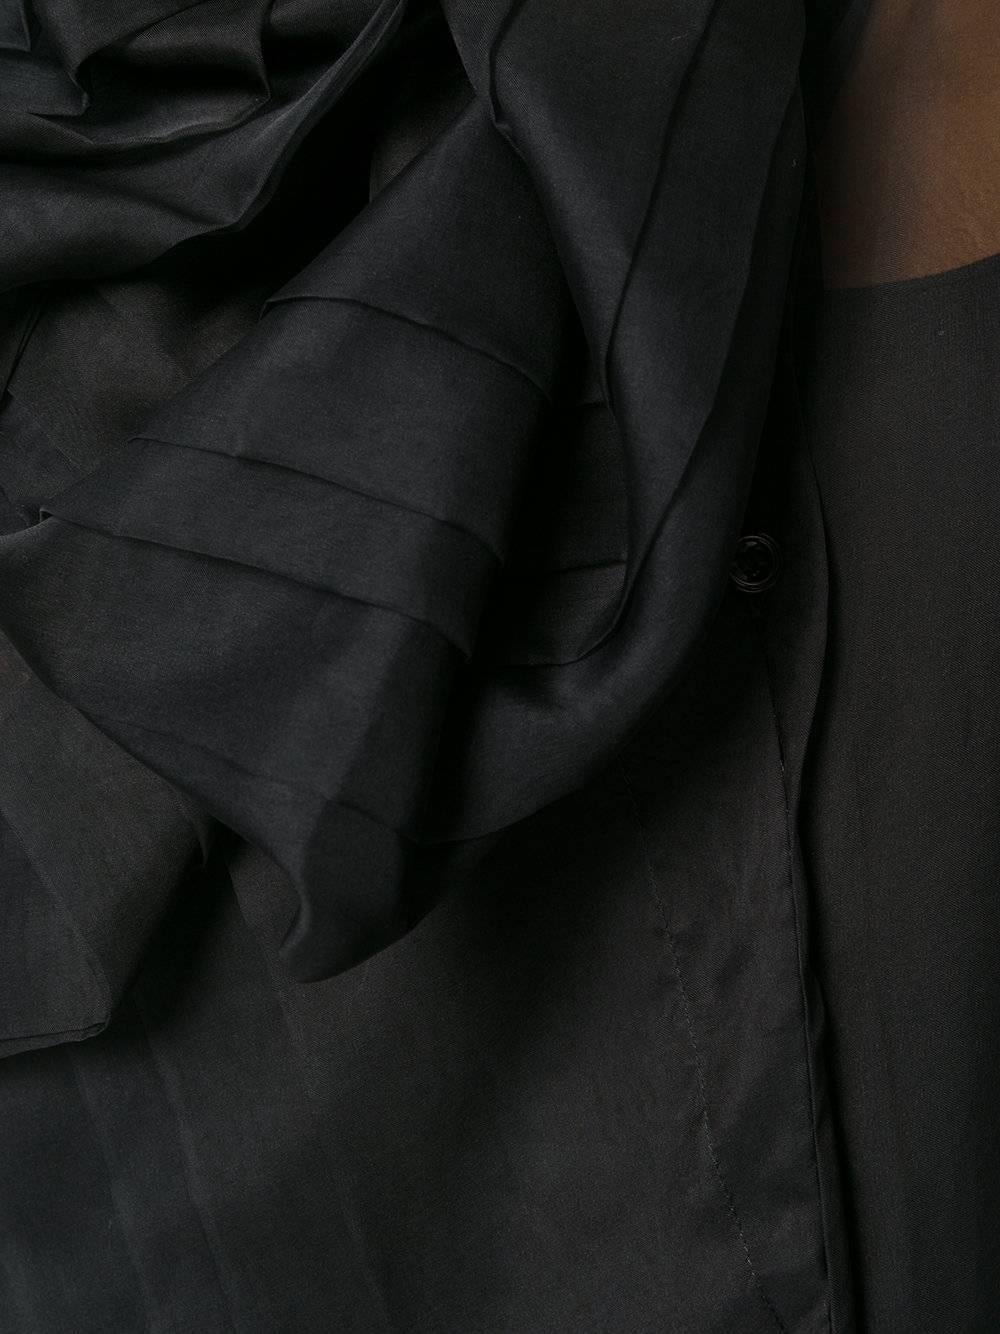 Circa 2004 CHRISTIAN DIOR by John Galliano black silk bow sheer blouse unworn For Sale 2